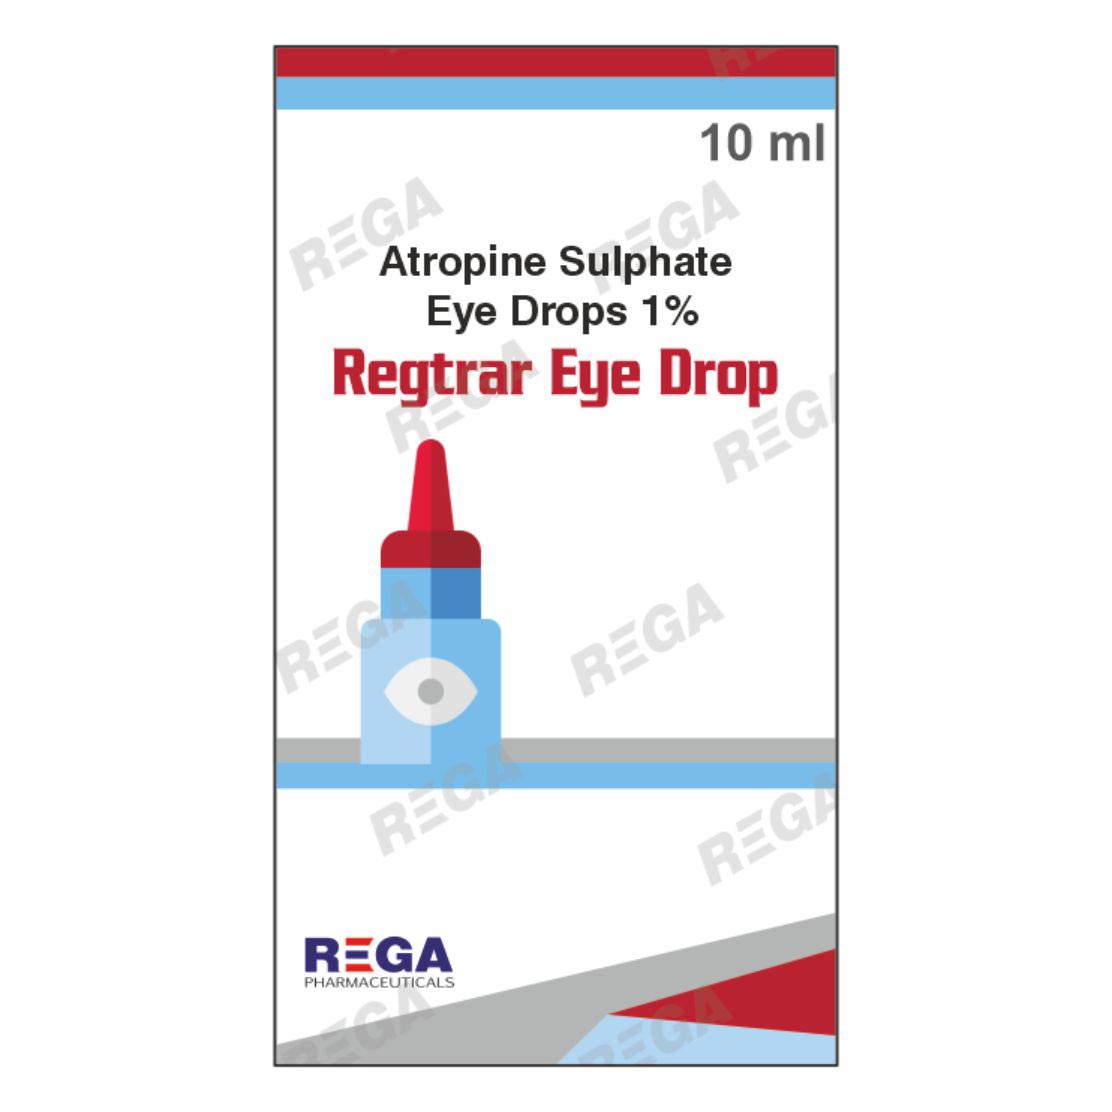 Atropine Sulphate Eye Drops 1%